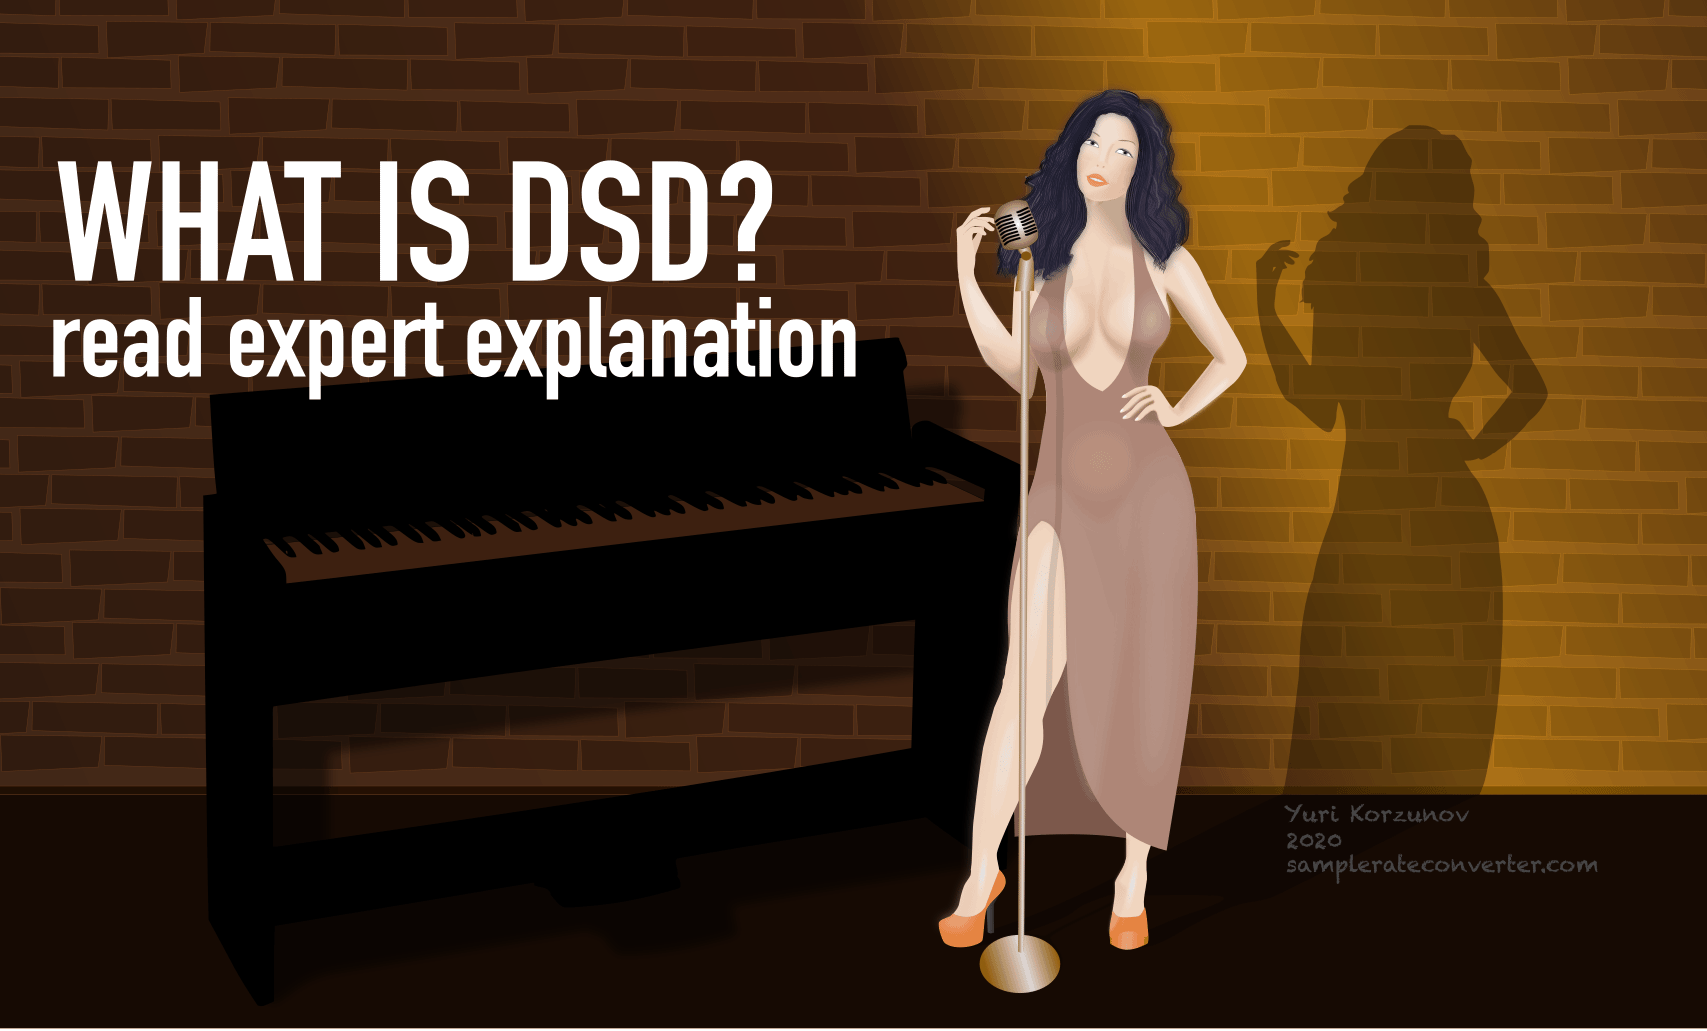 Articles about DSD audio